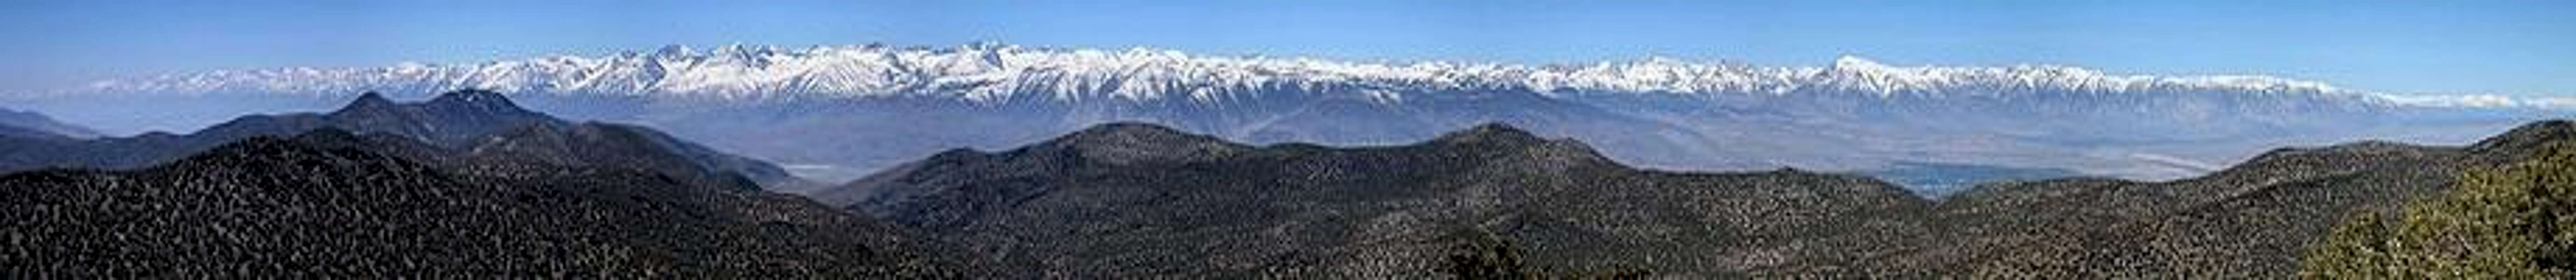 High Sierra Panorama